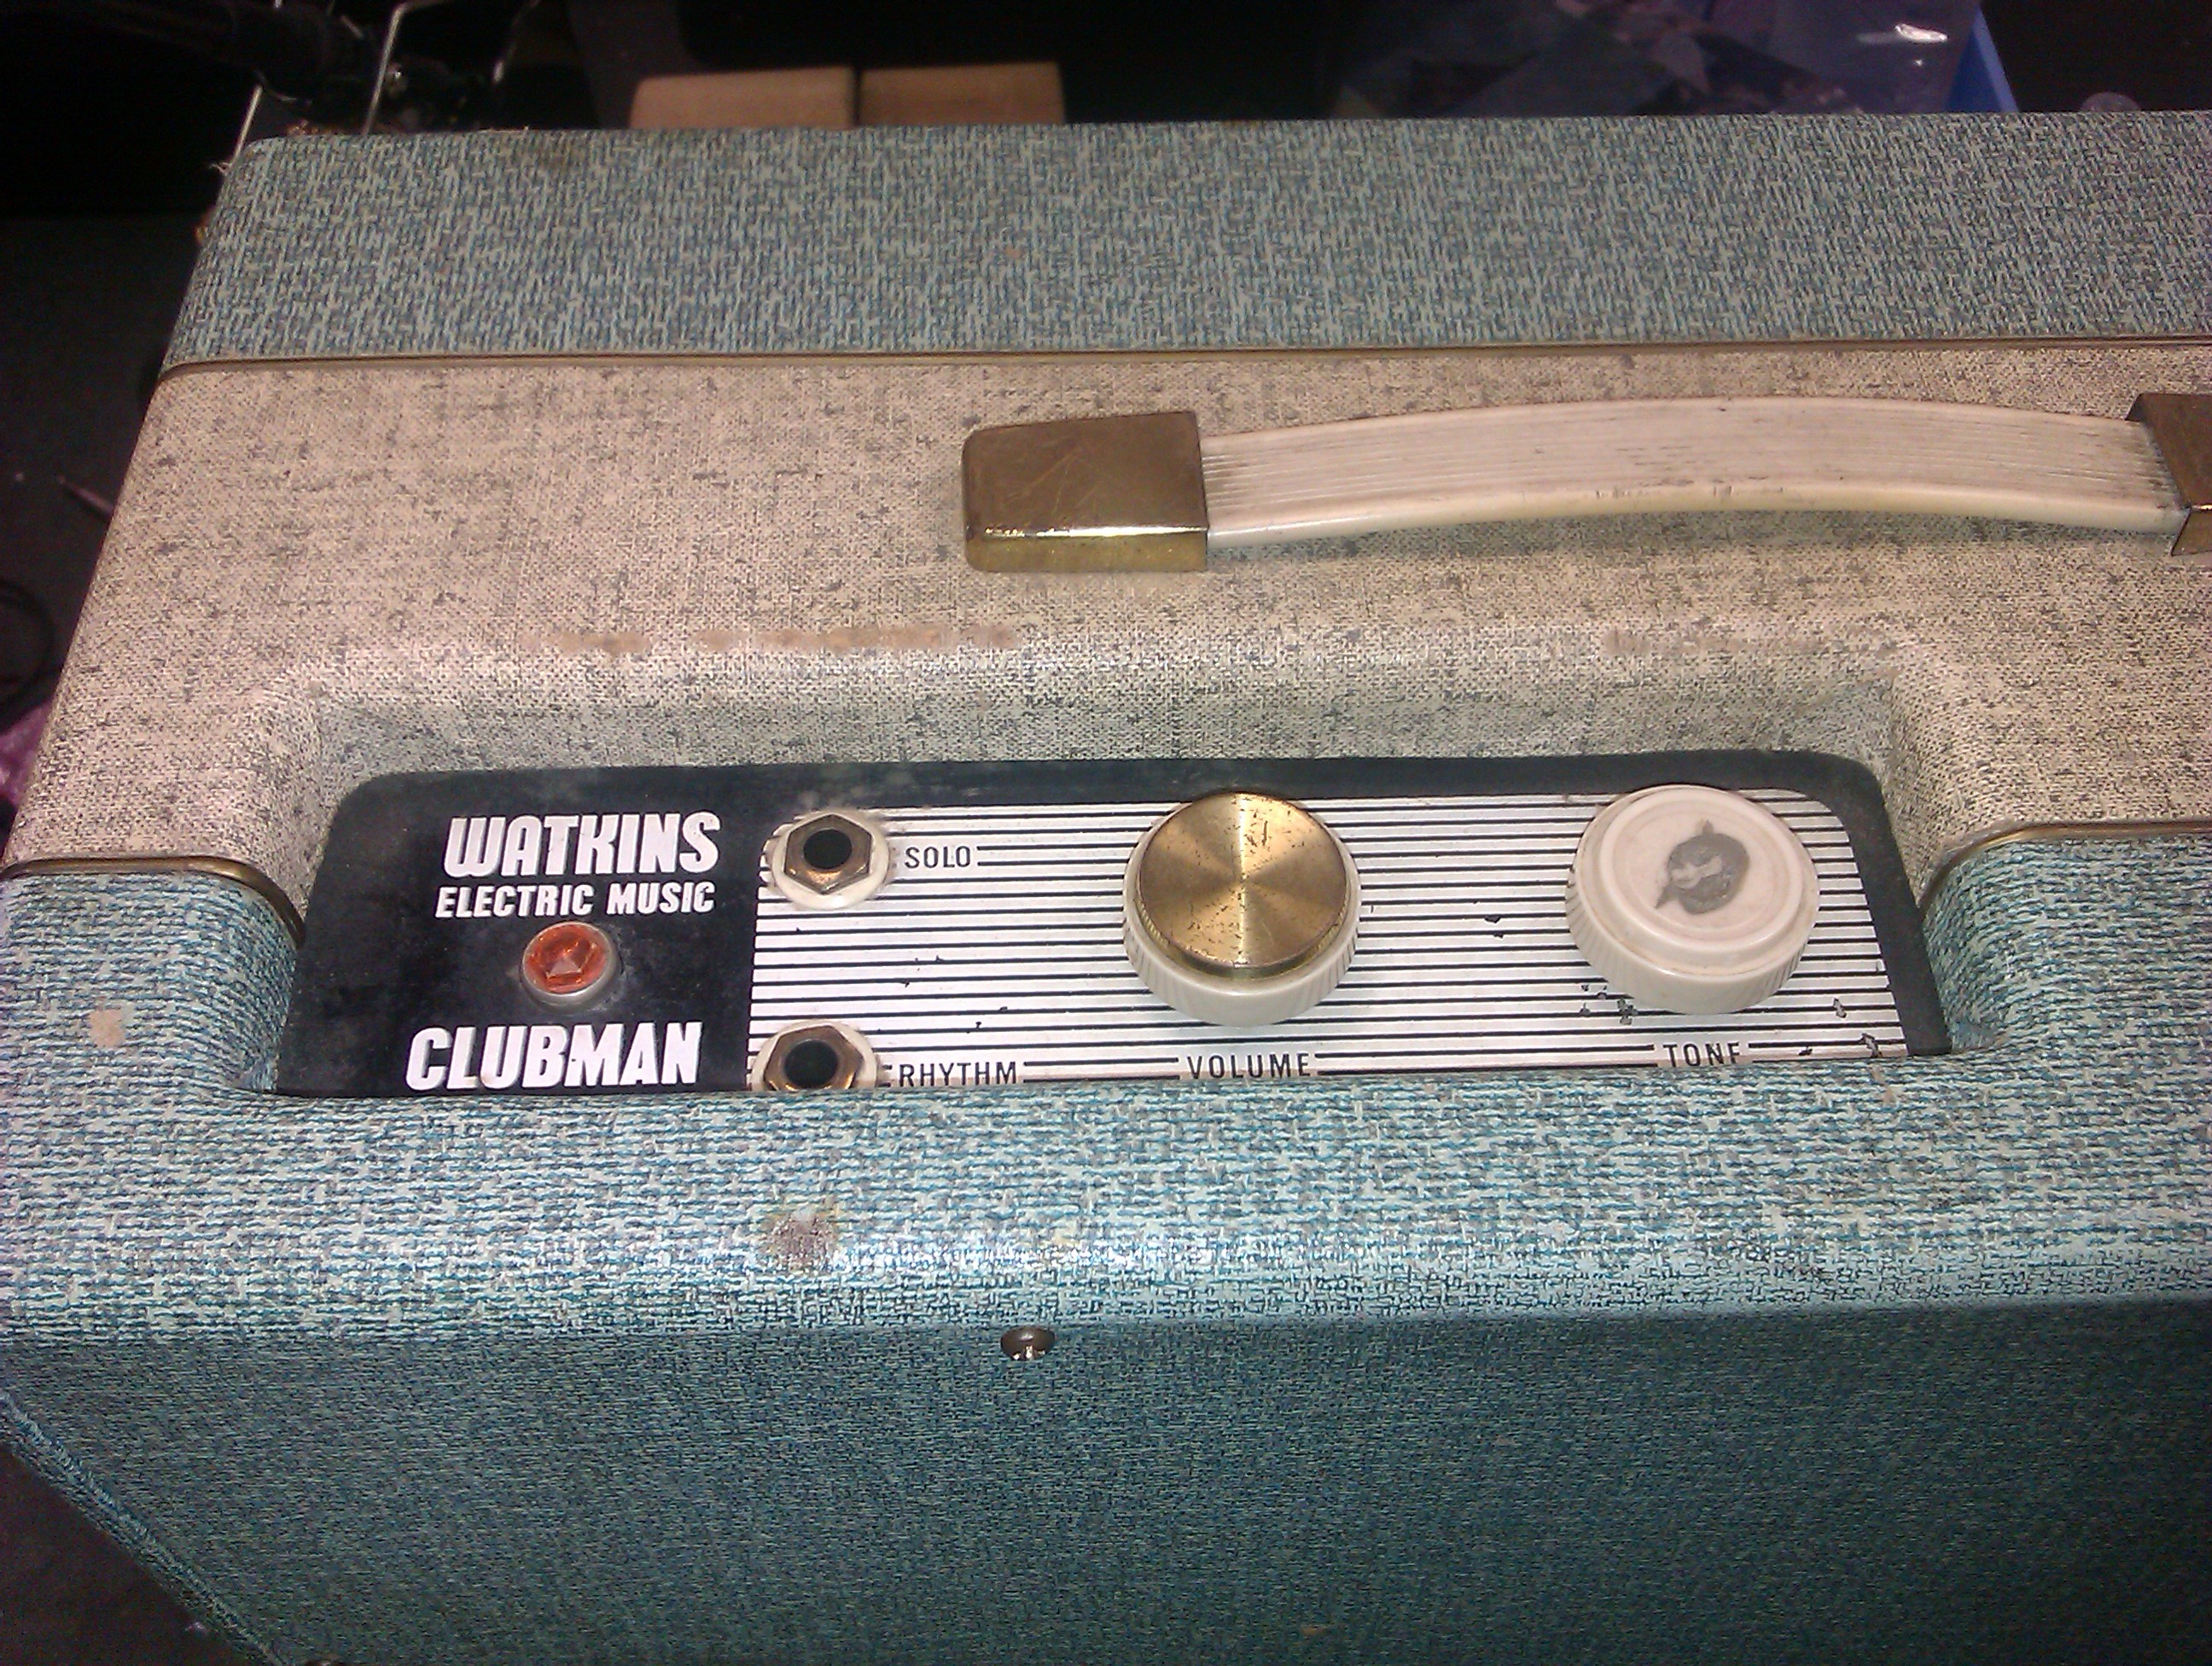 The Wem Clubman control panel.